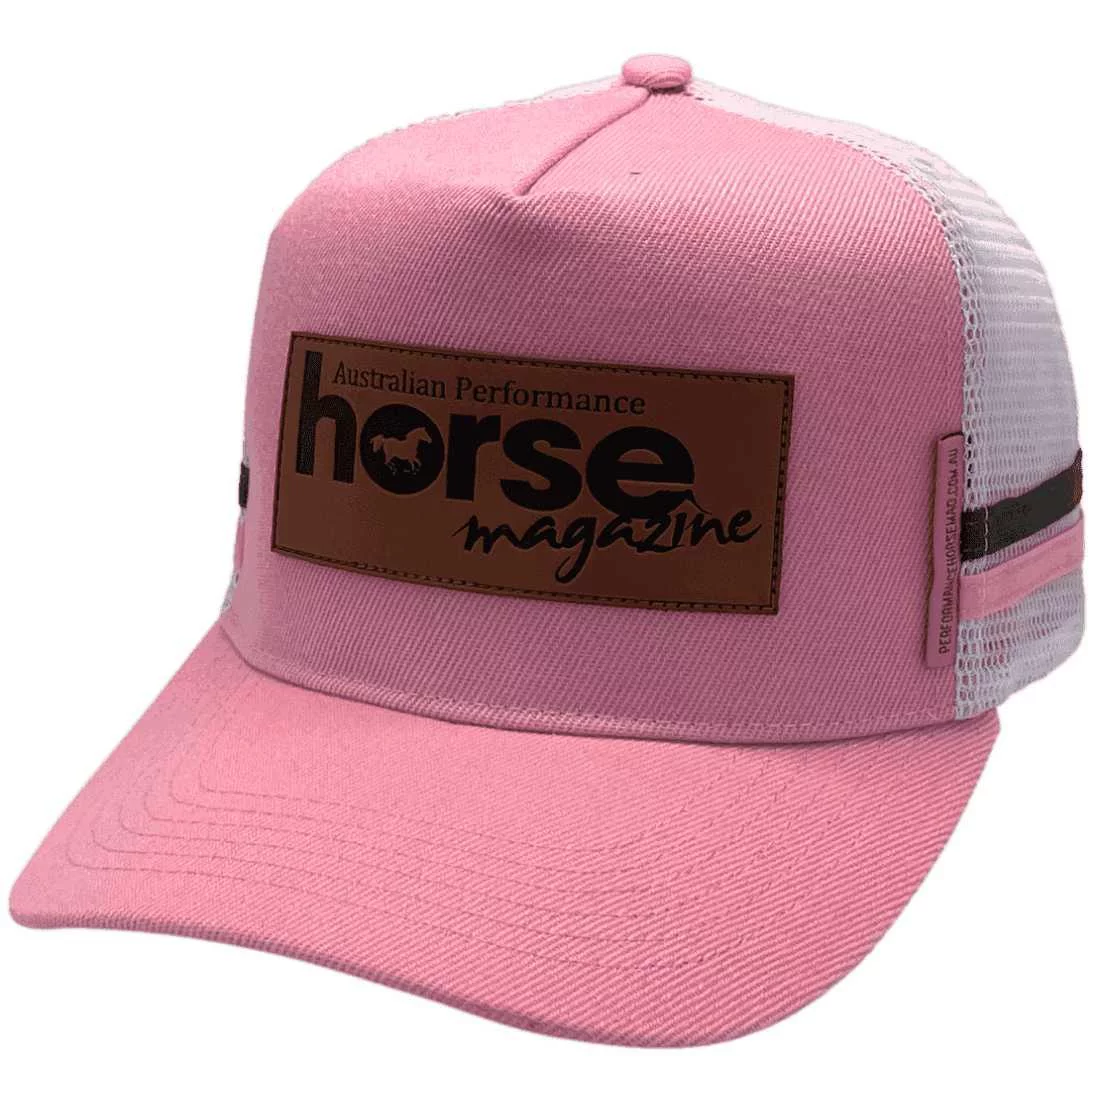 Australian Performance Horse Magazine HP Original Midrange Aussie Trucker Hat with Double Side Bands Acrylic